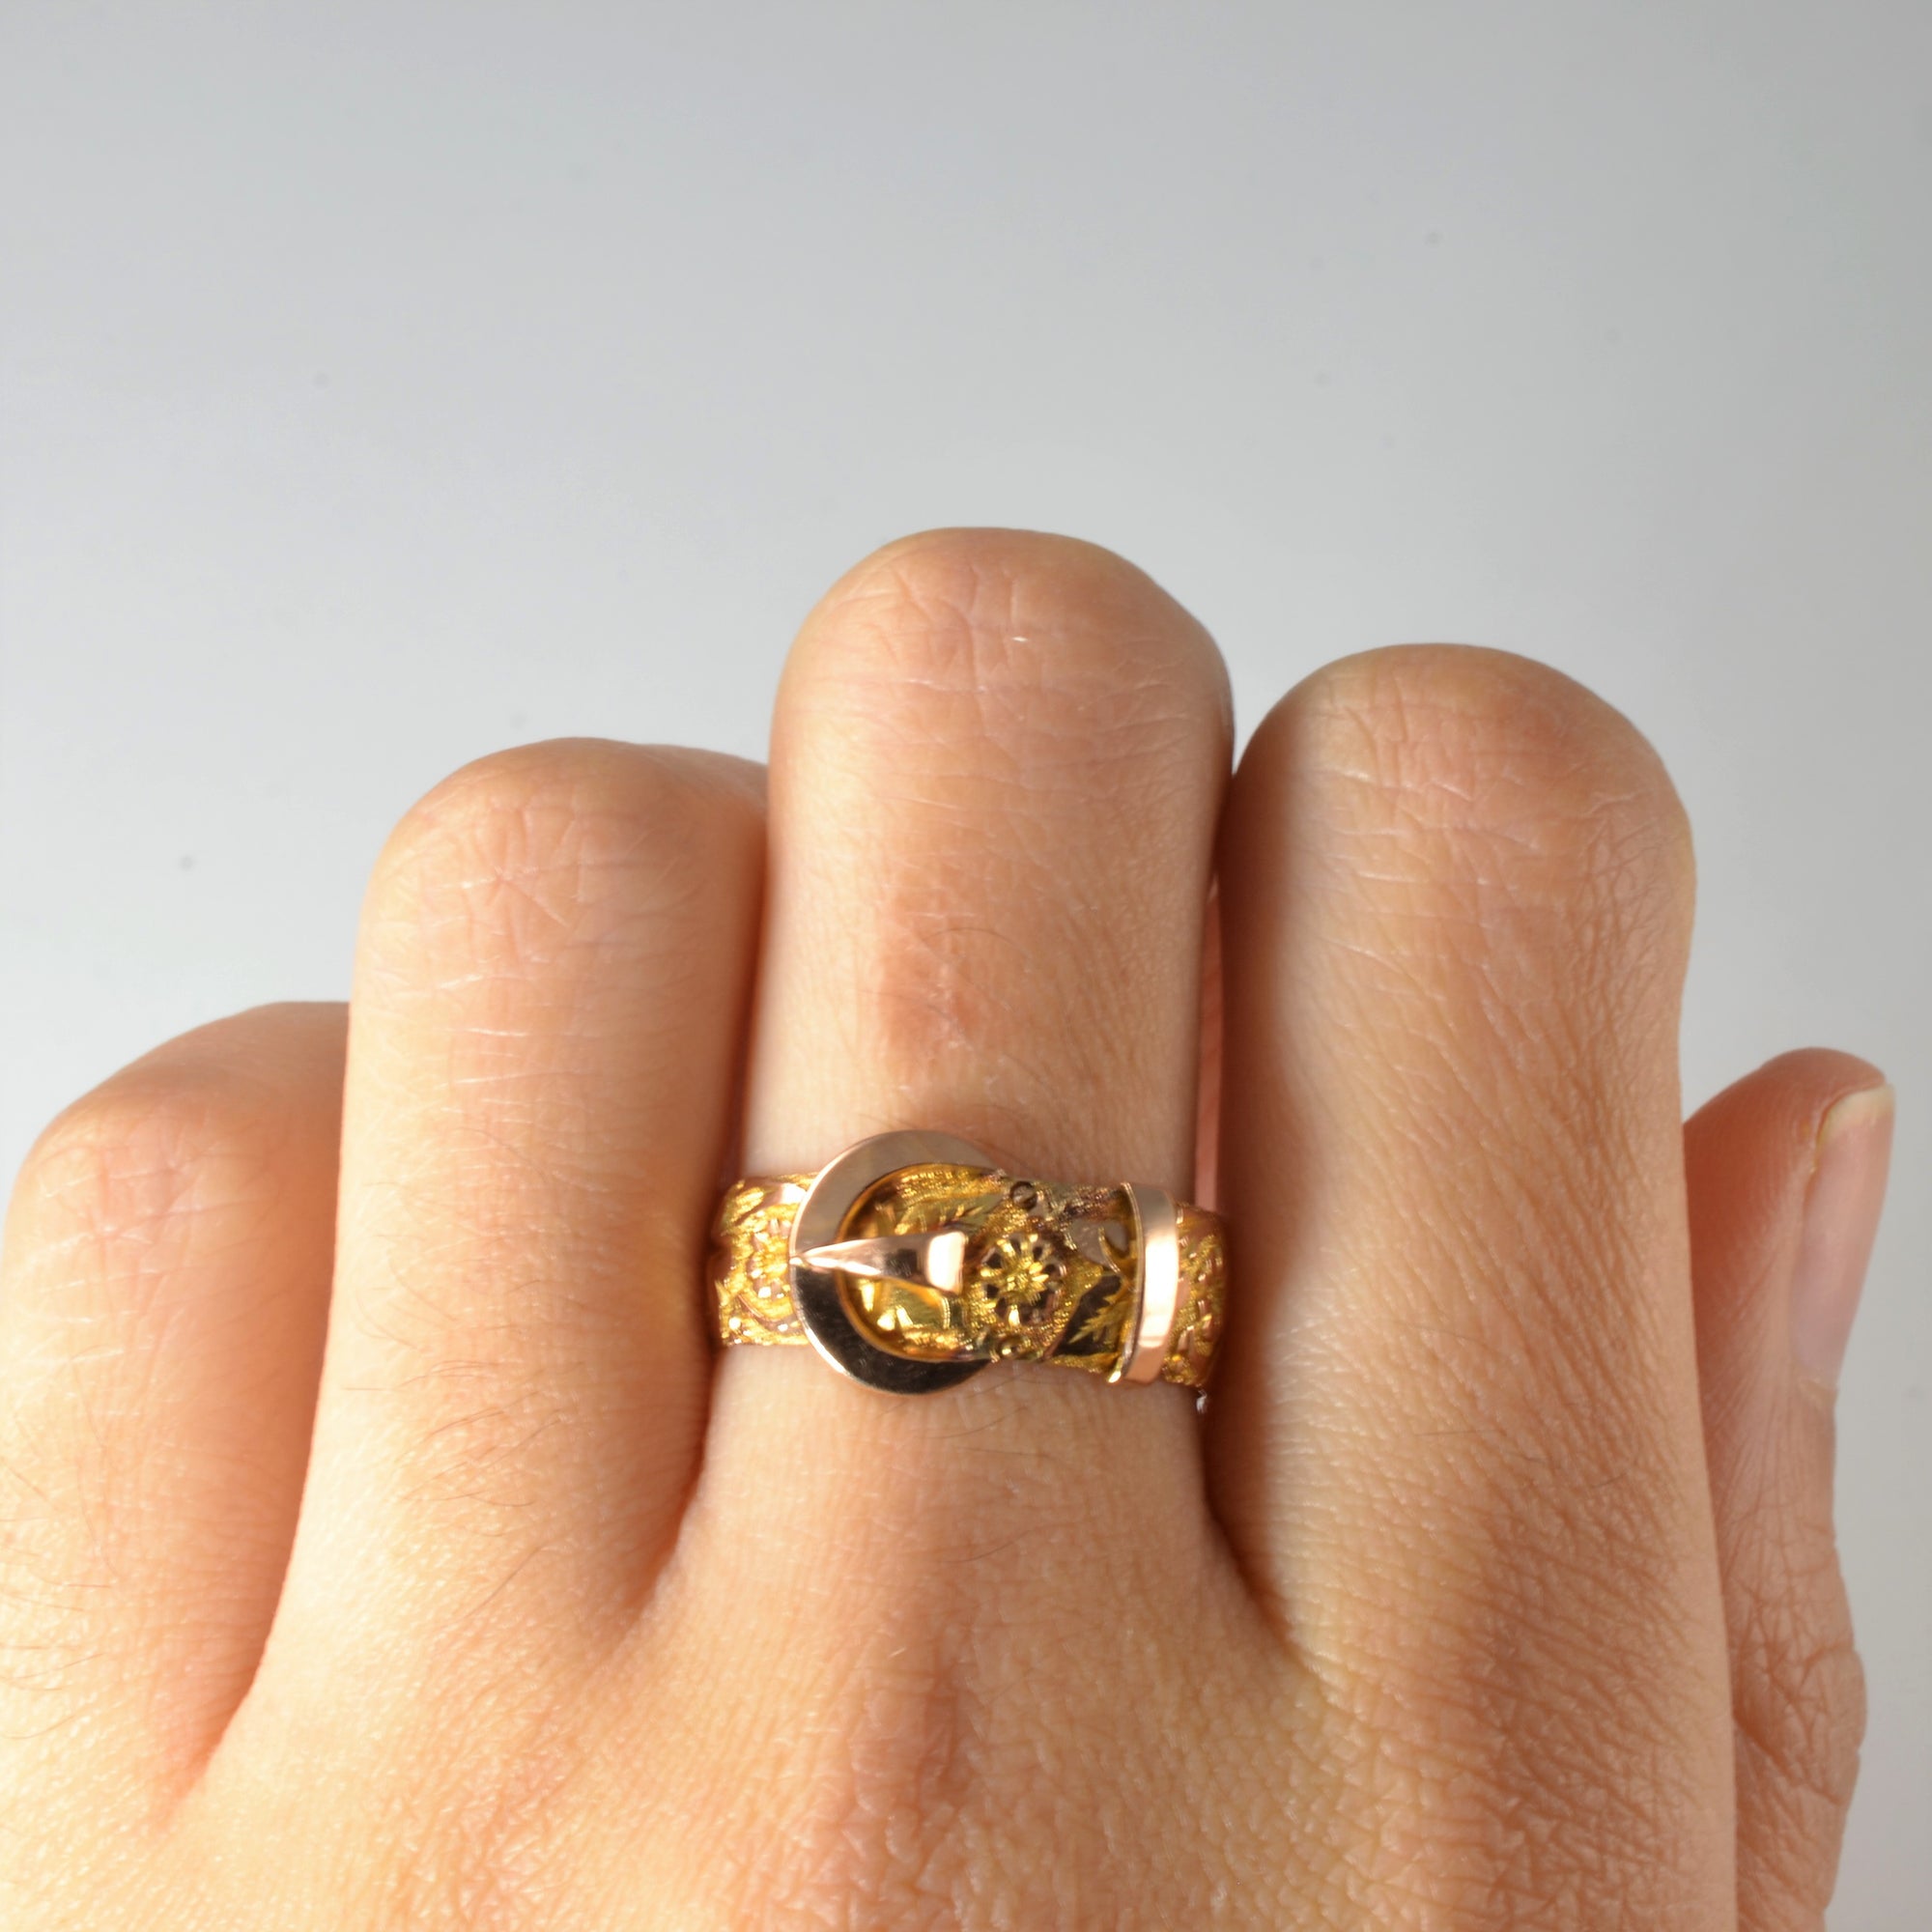 Belt buckle ring on hand, vintage rings for sale, vintage gold rings